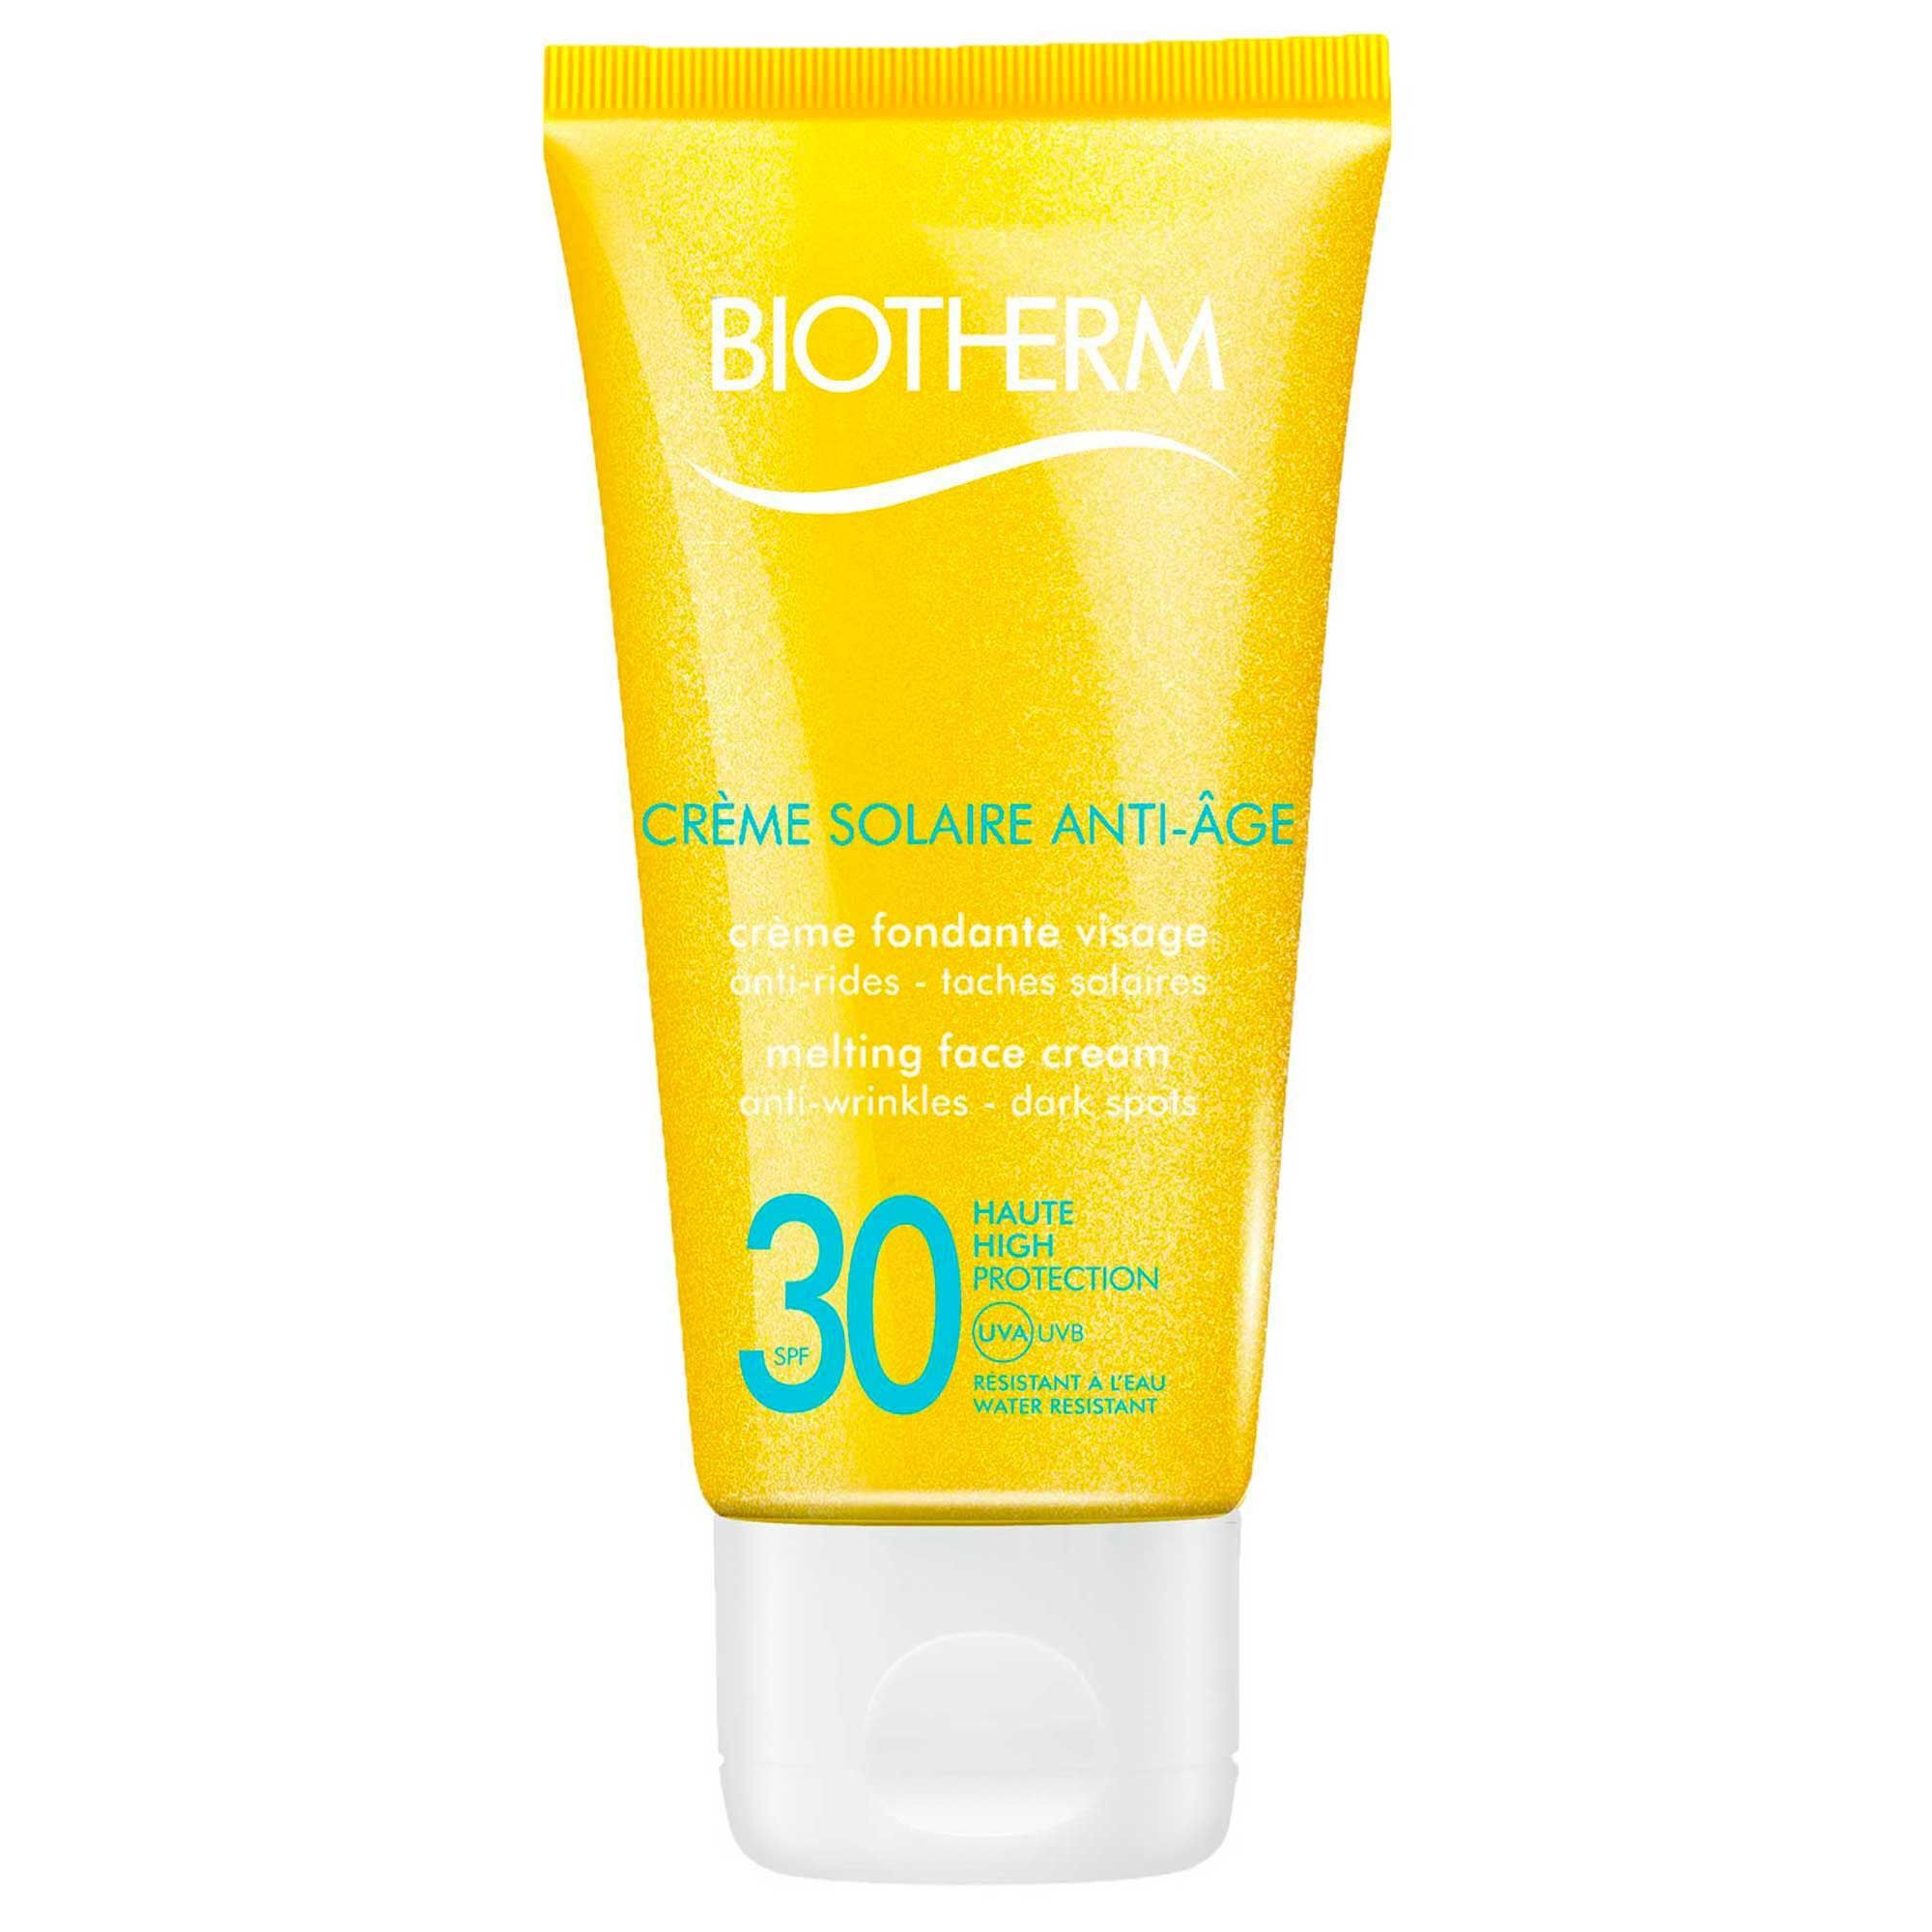 Biotherm Creme Solaire Anti-Age schmelzende Gesichtscreme SPF 30